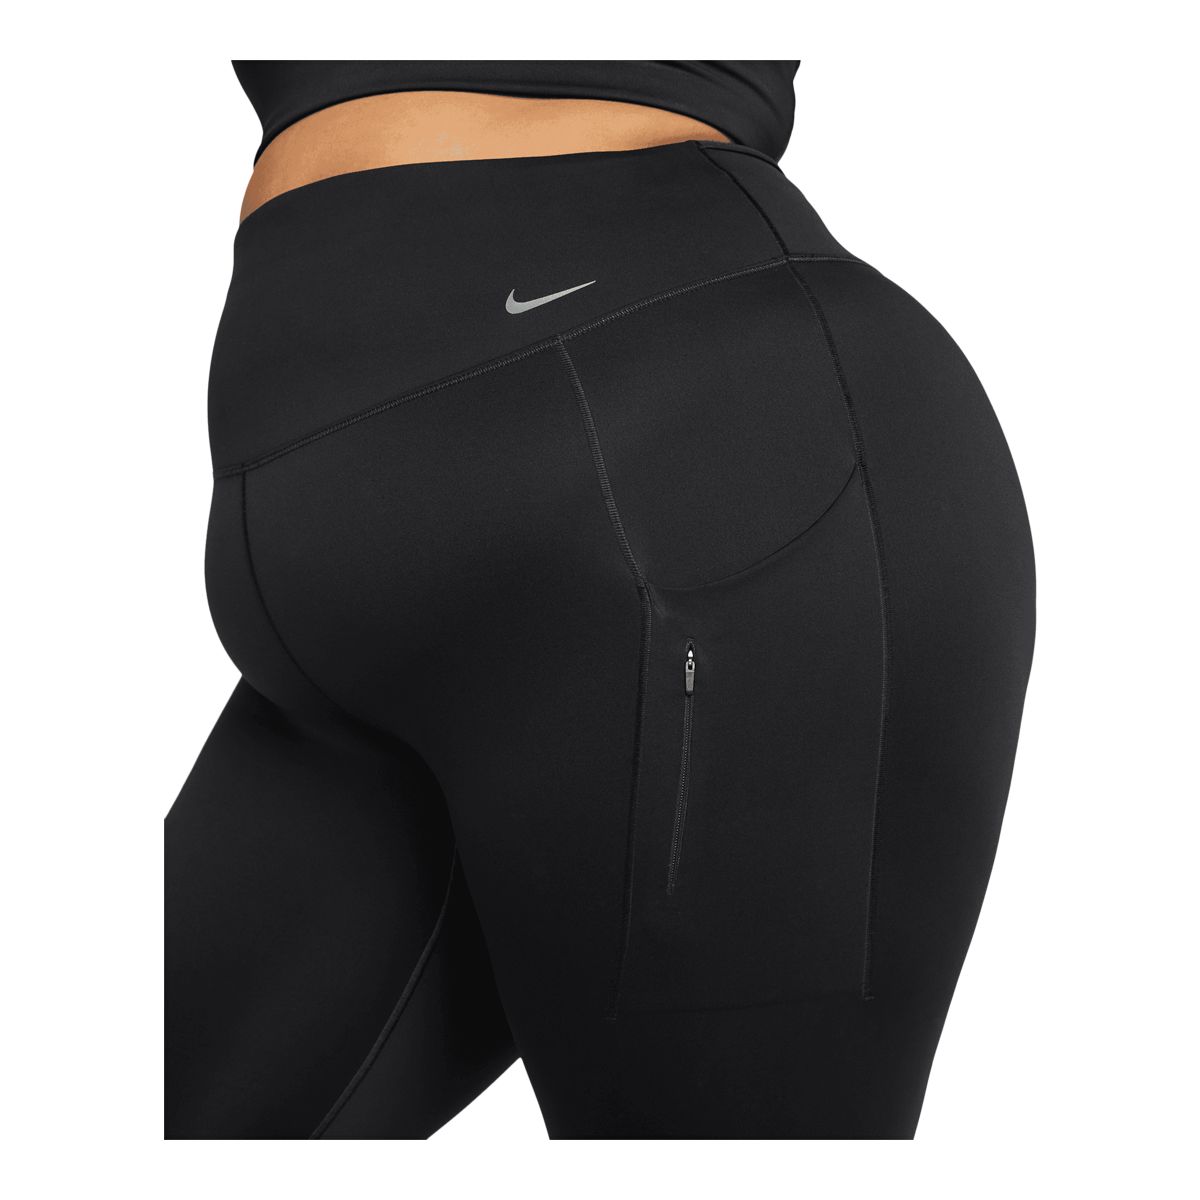 Nike Pants Womens 1X Plus Black Orange Air 7/8 Leggings Running Yoga New  768